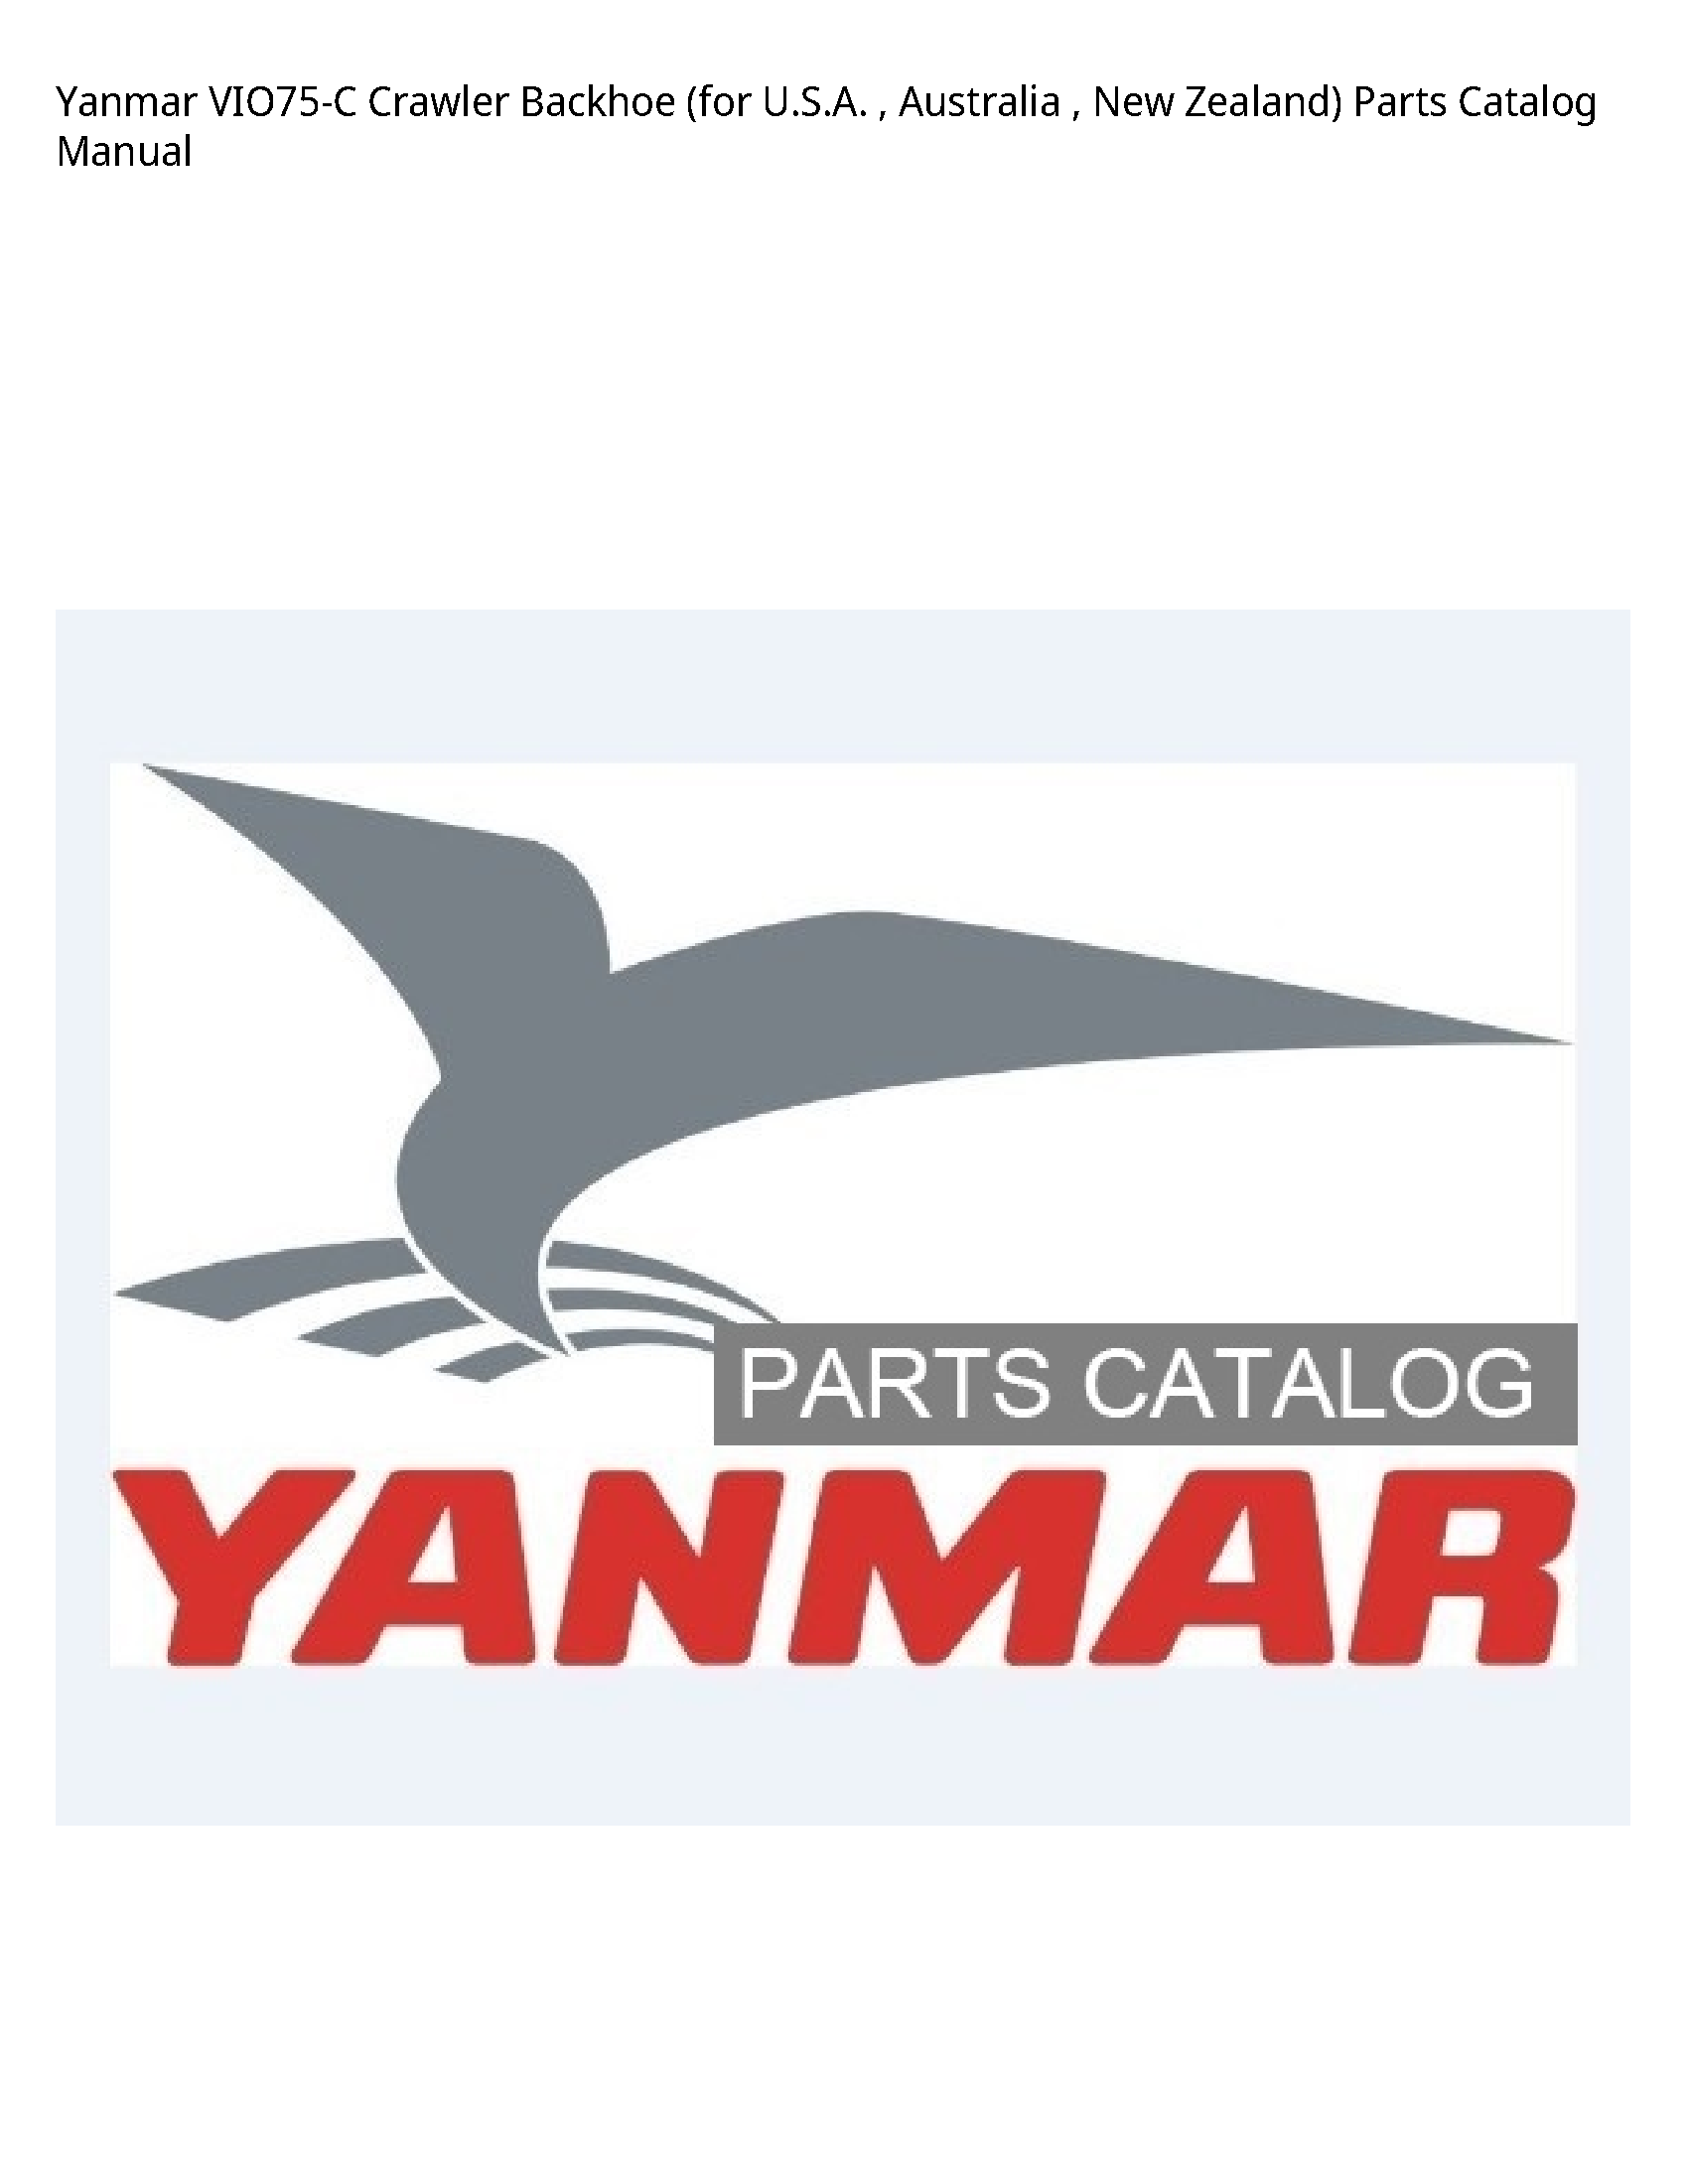 Yanmar VIO75-C Crawler Backhoe (for U.S.A. Australia New Zealand) Parts Catalog manual